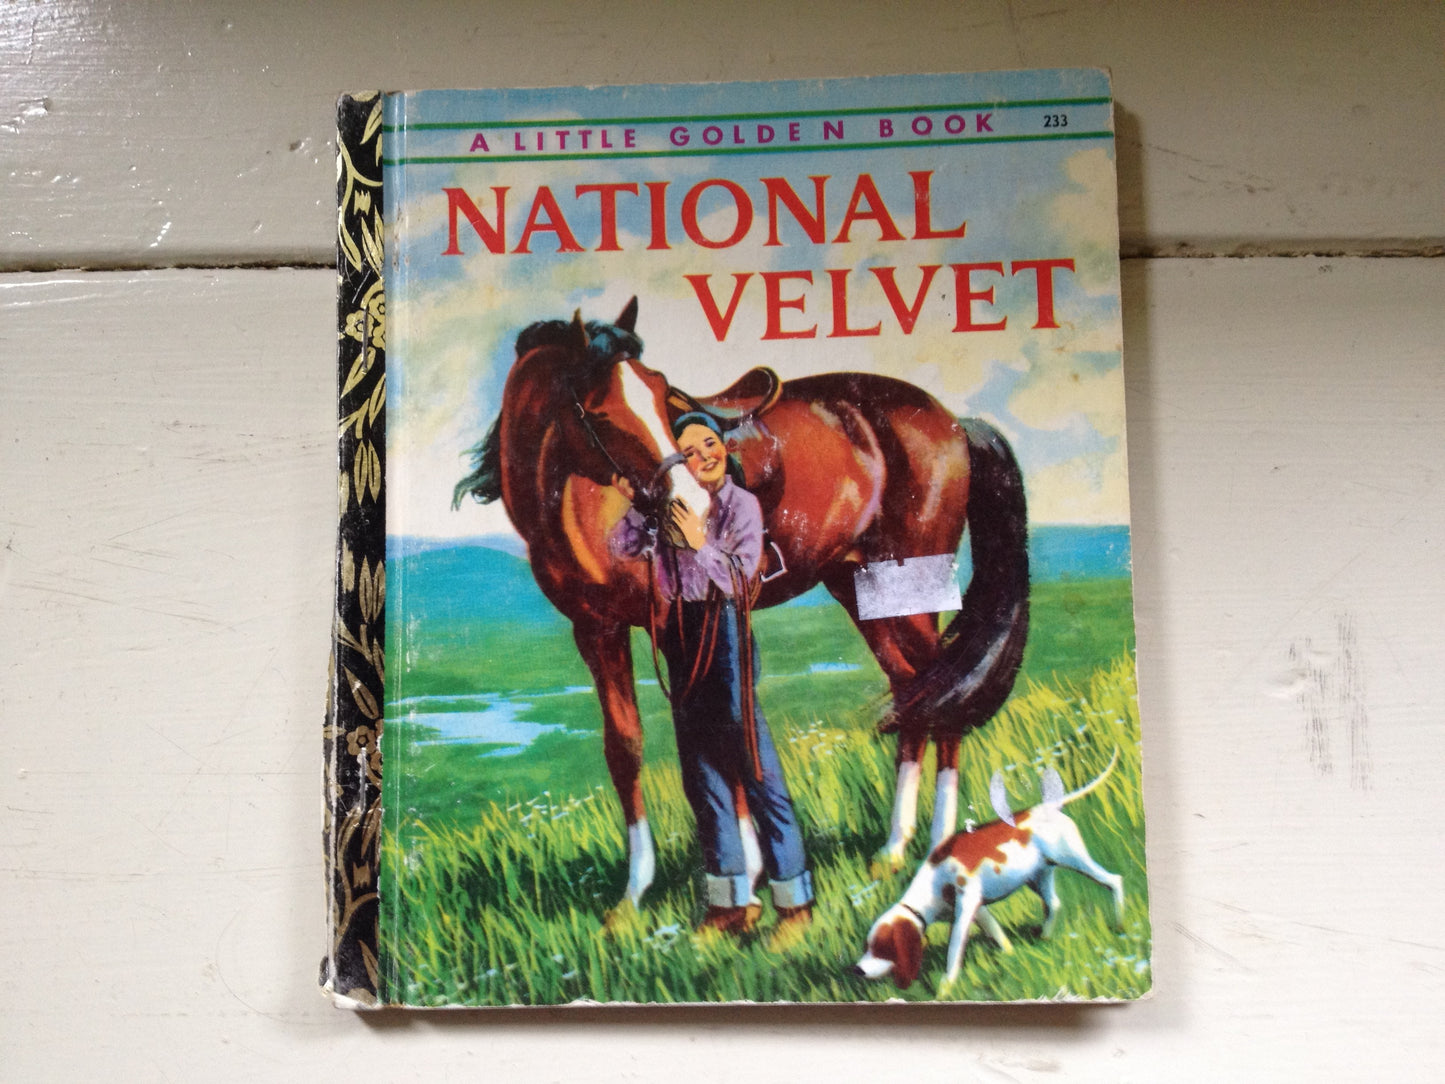 a Little Golden Book National Velvet